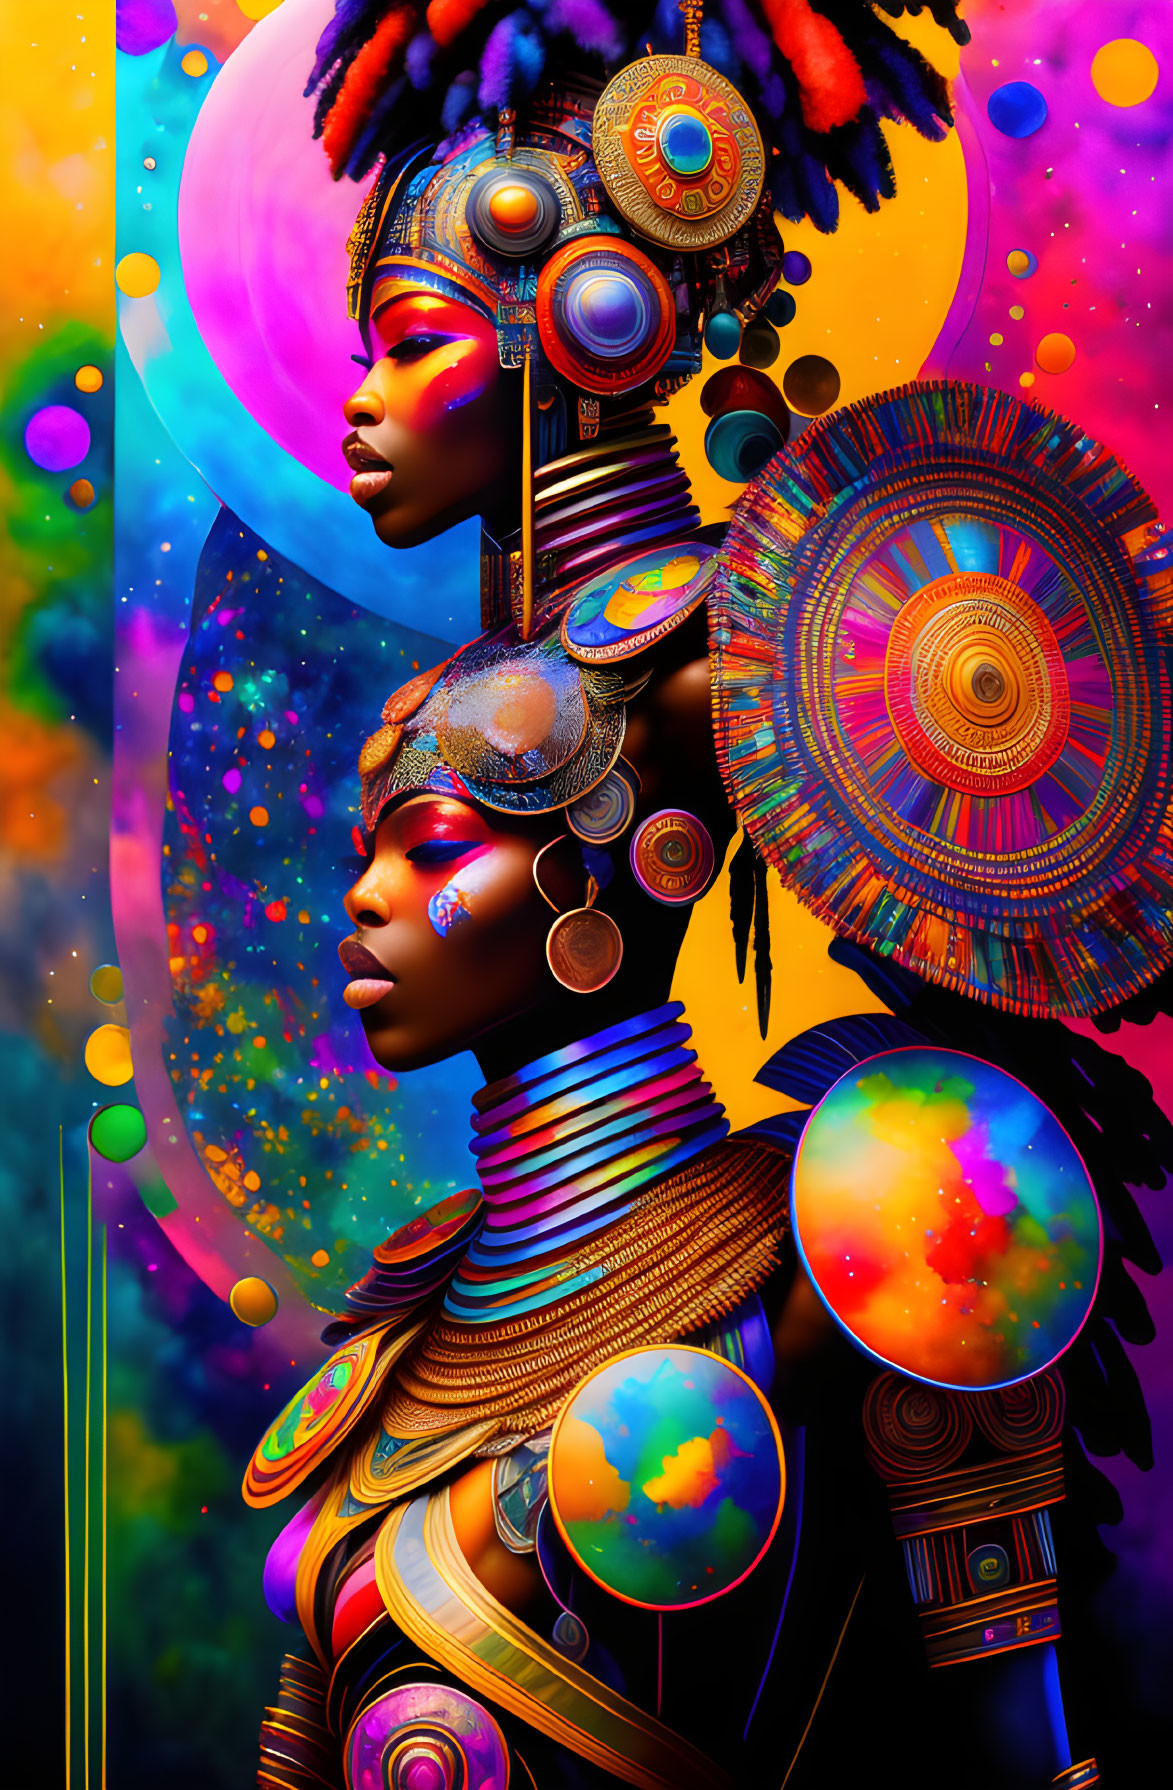 Futuristic African-inspired digital art of two women in vibrant attire